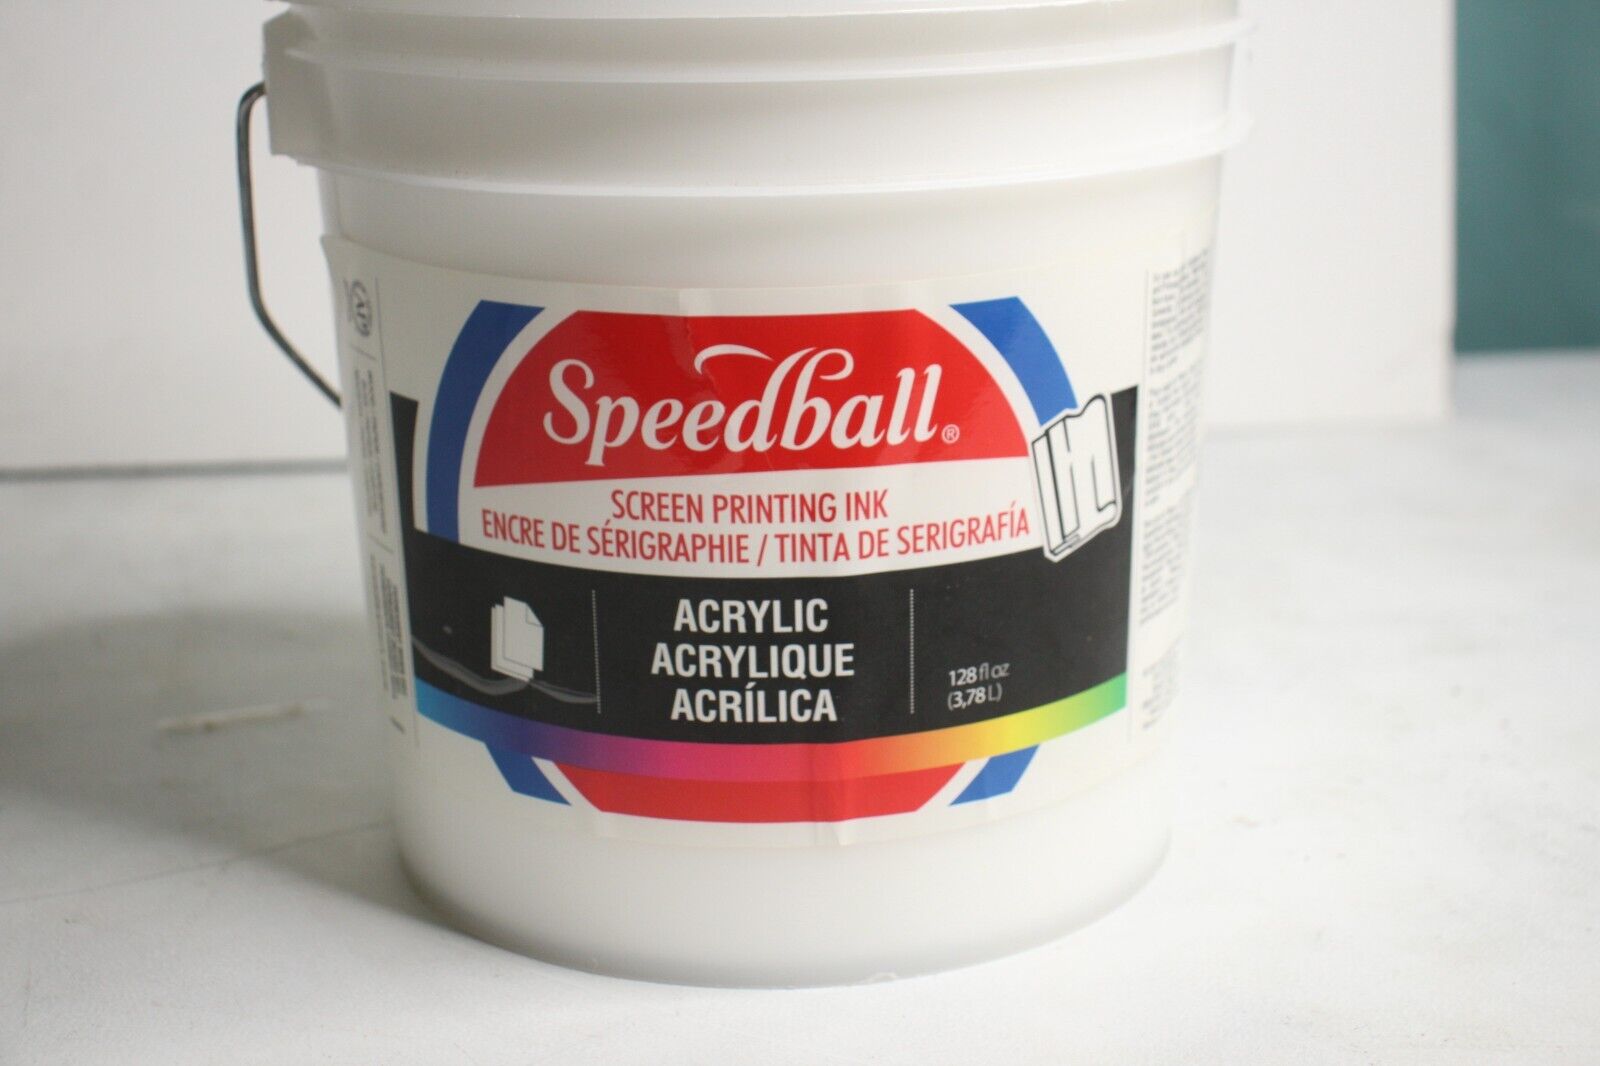 Speedball Screen Printing Ink Acrylic White 128 Oz Gallon